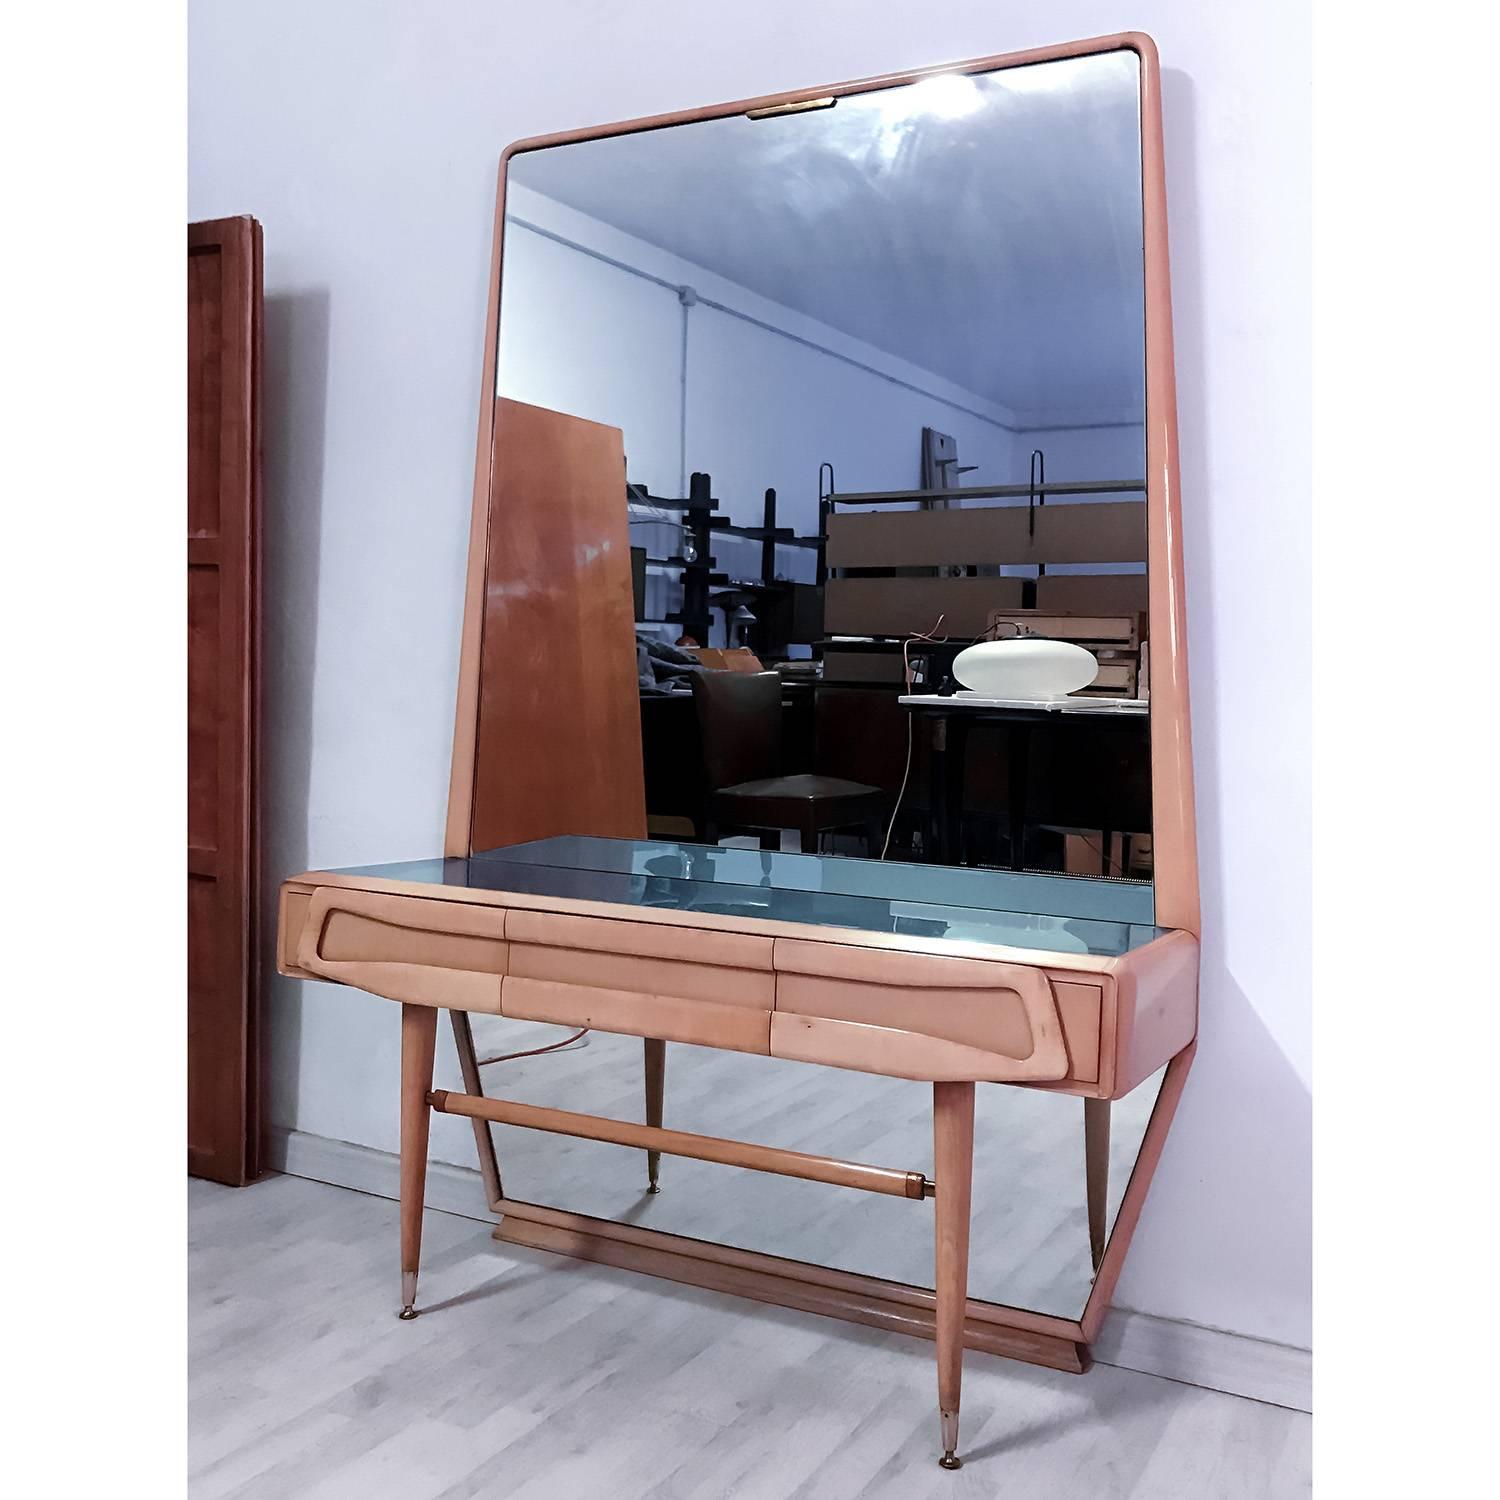 Mid-20th Century Italian Maple Vanity Dresser with Mirror attributed to Silvio Cavatorta, 1950s